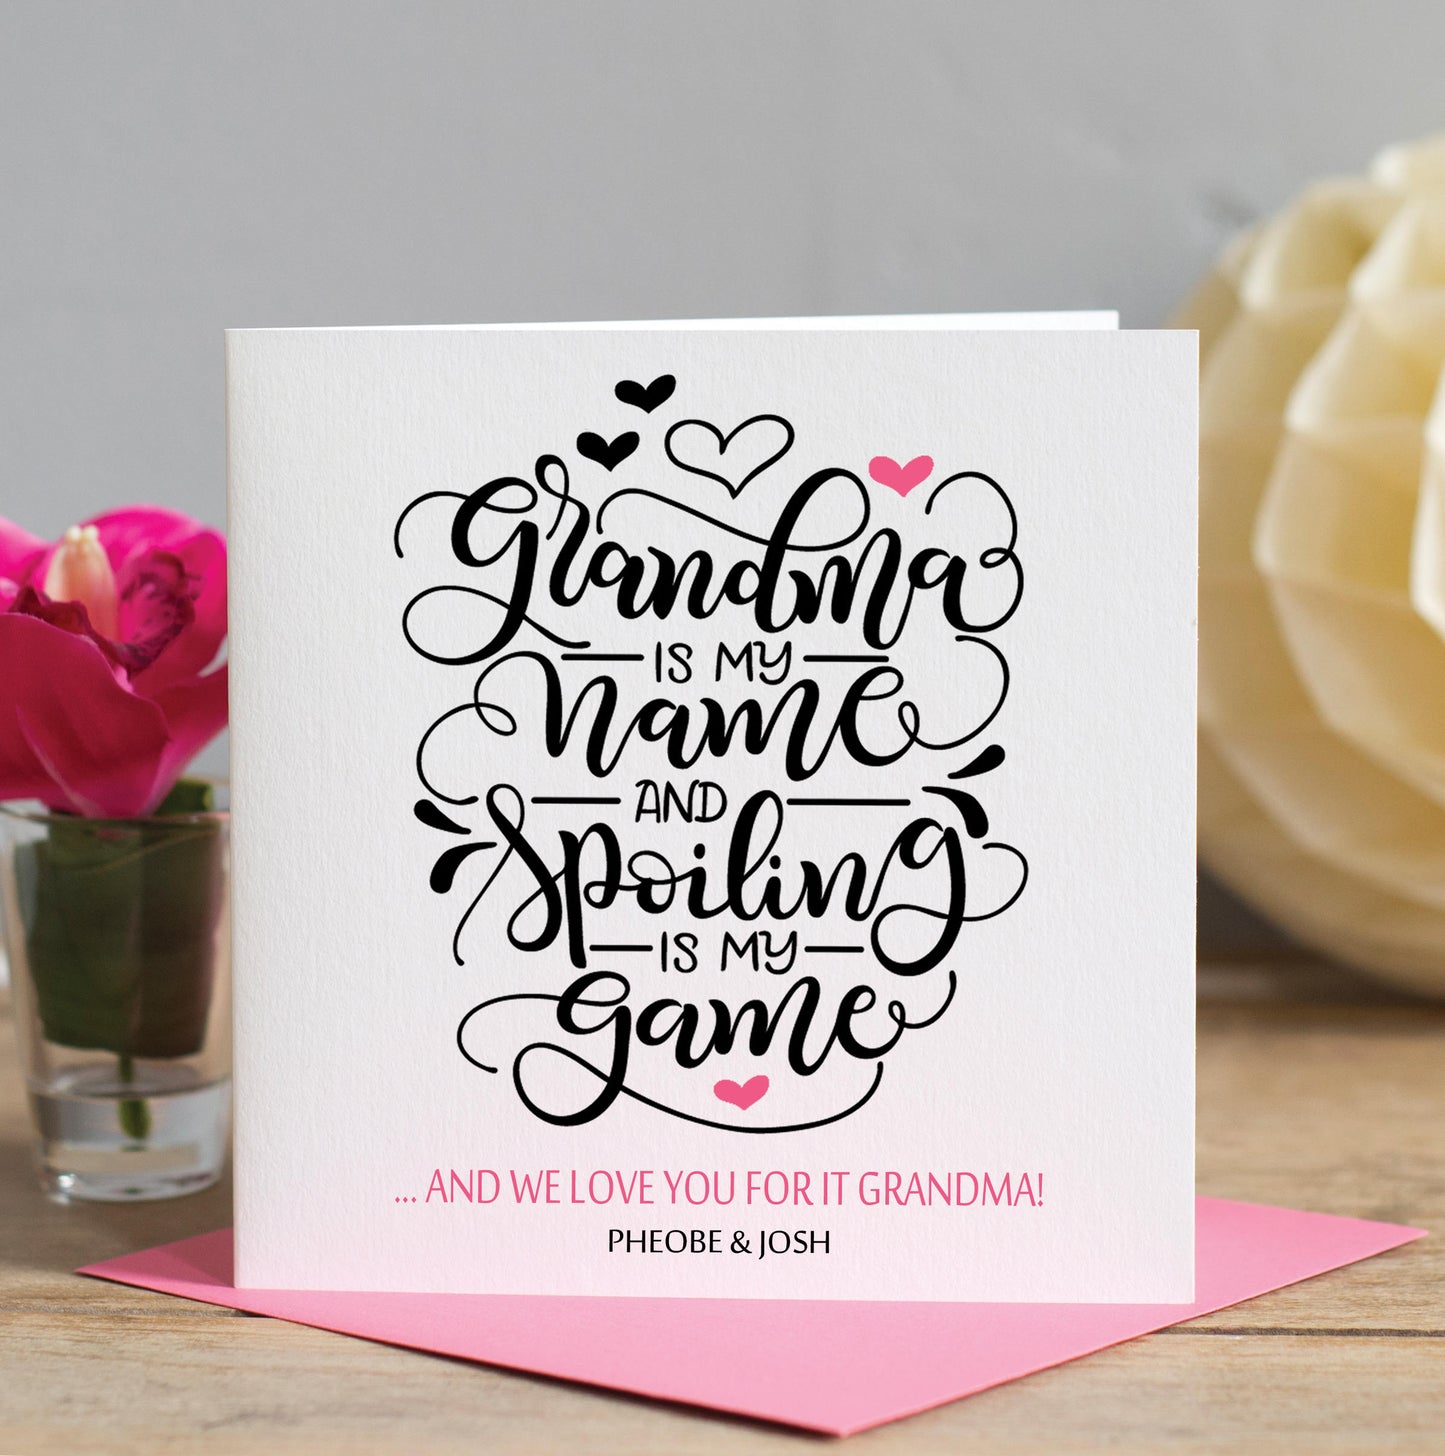 Grandma Card - Spoiling is my Game